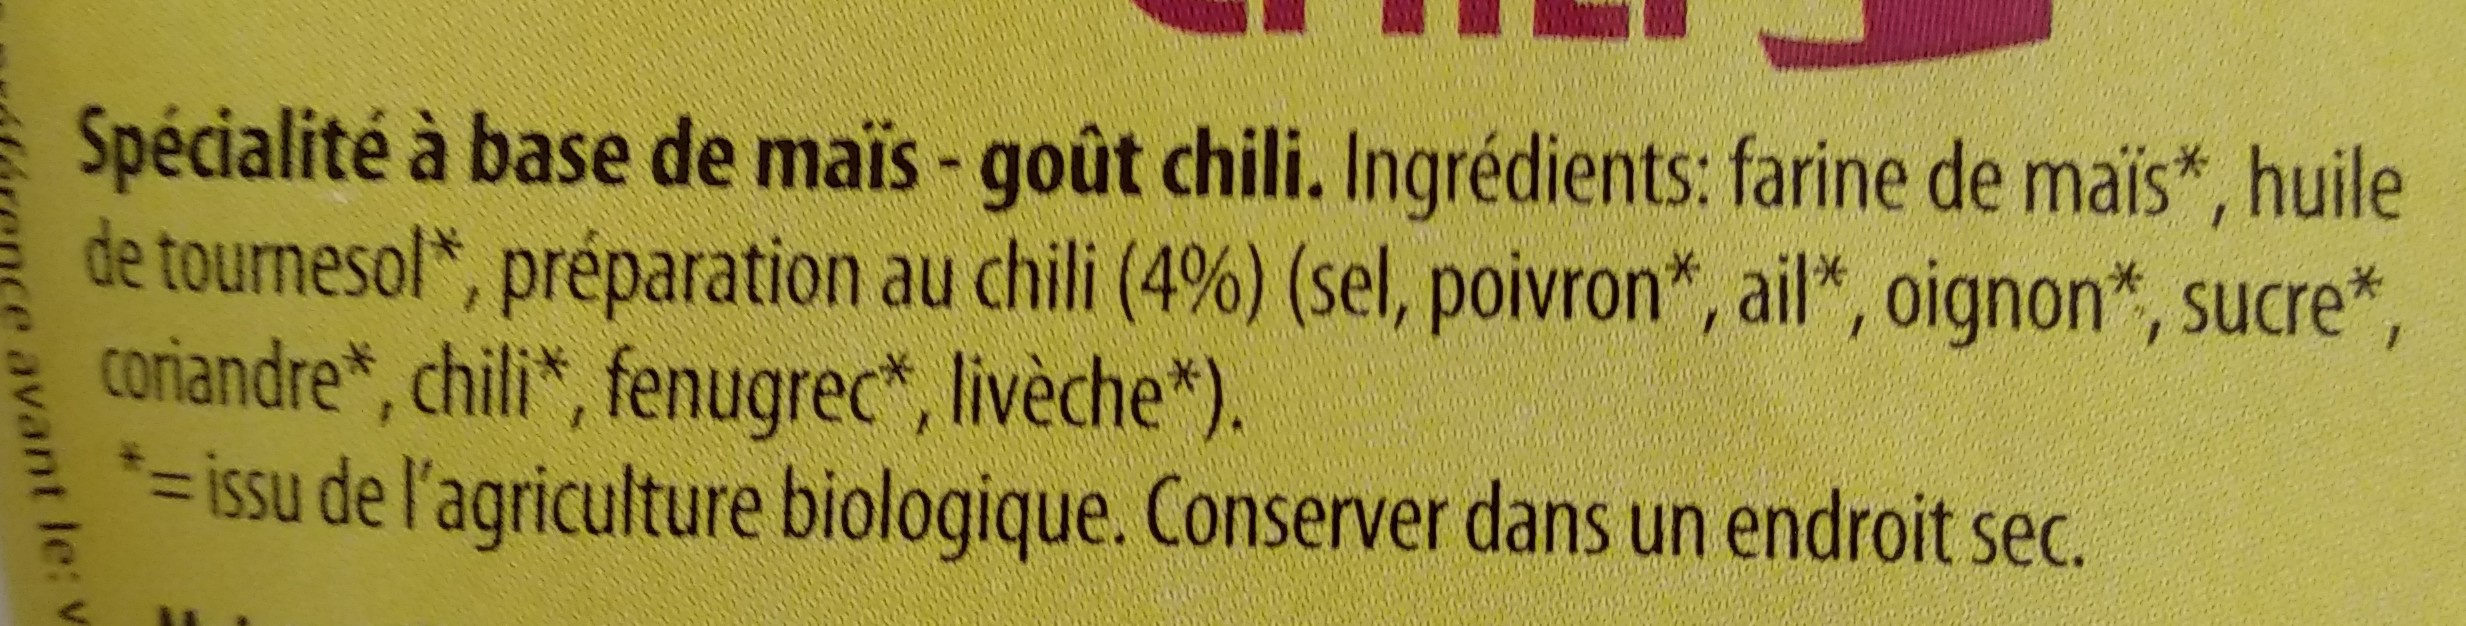 CHIPS MAIS CHILI SANS OGM - Ingredienser - fr